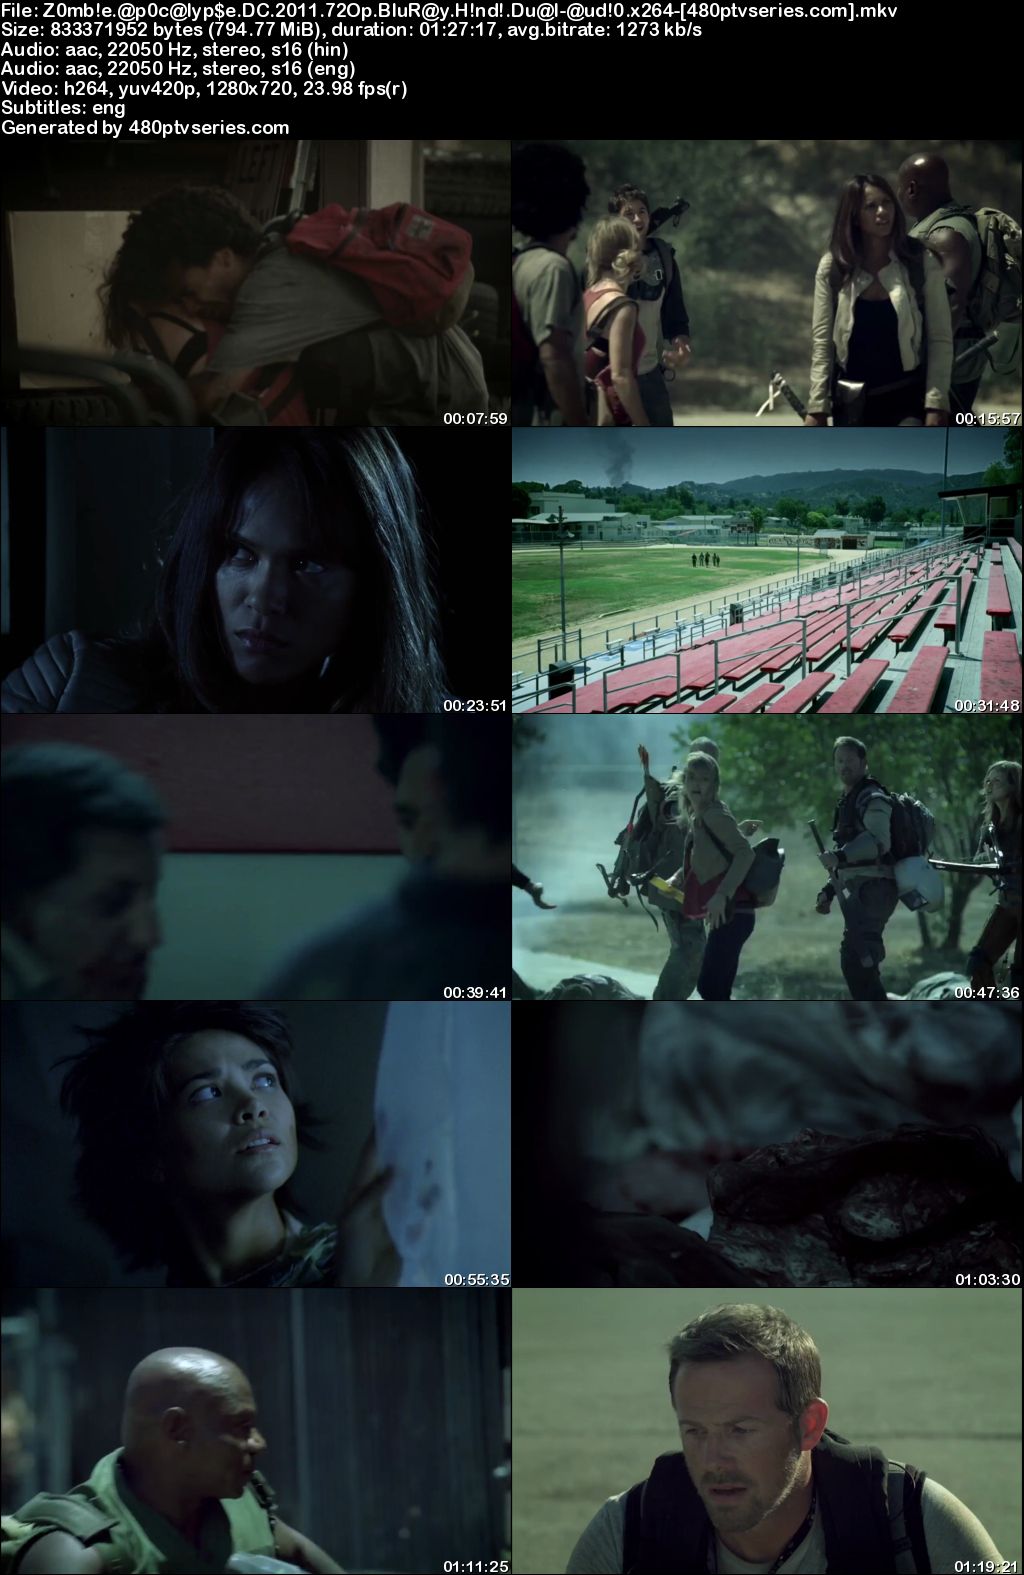 Watch Online Free Zombie Apocalypse (2011) Full Hindi Dual Audio Movie Download 480p 720p BluRay